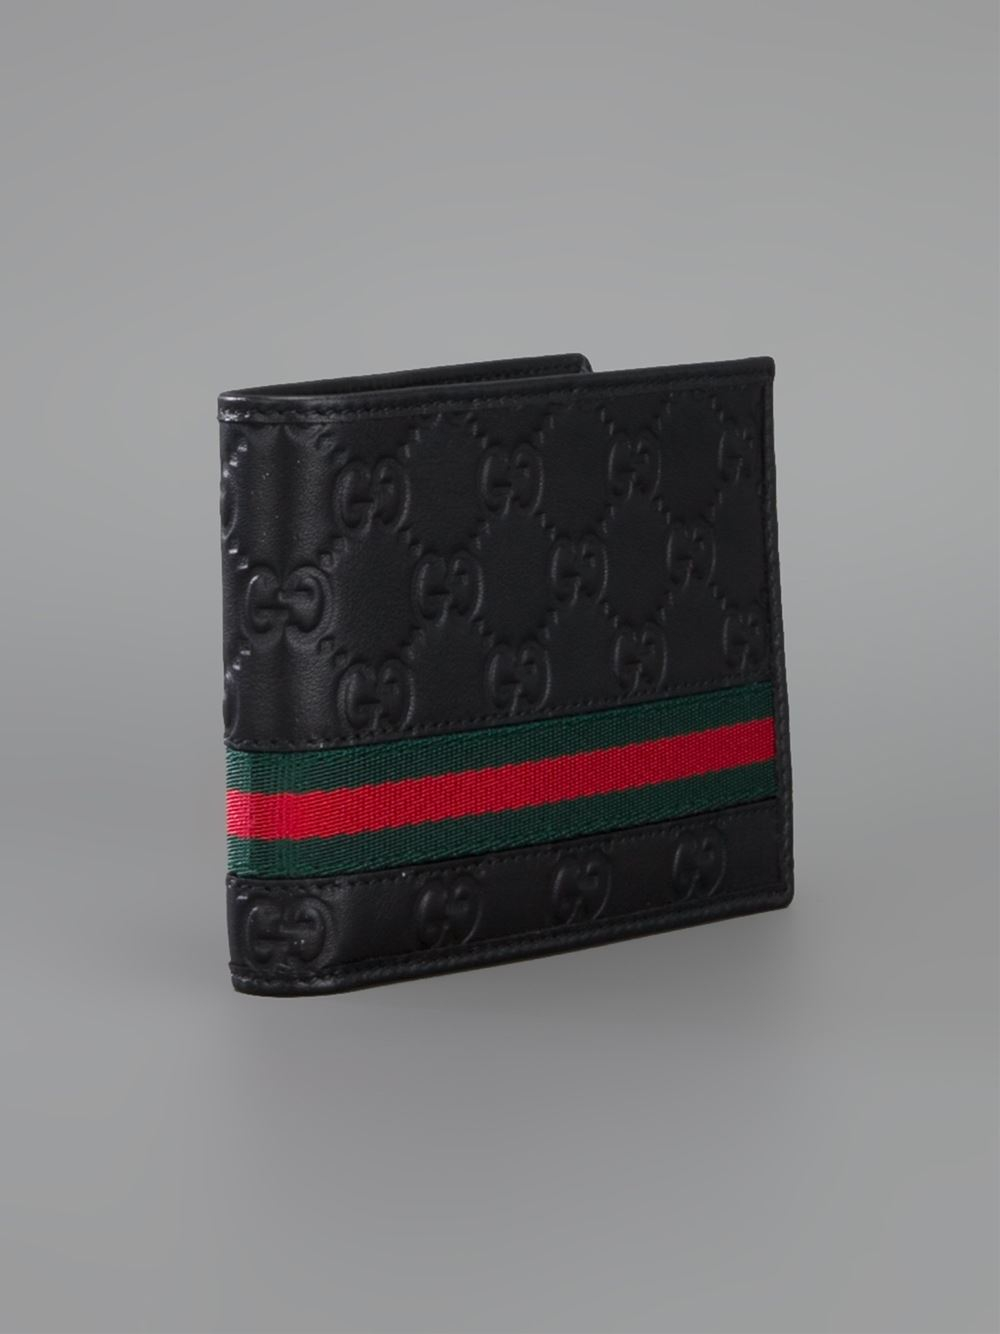 Gucci Microguccissima Monogram Logo Black Soft Margaux Leather Bifold Wallet  | eBay